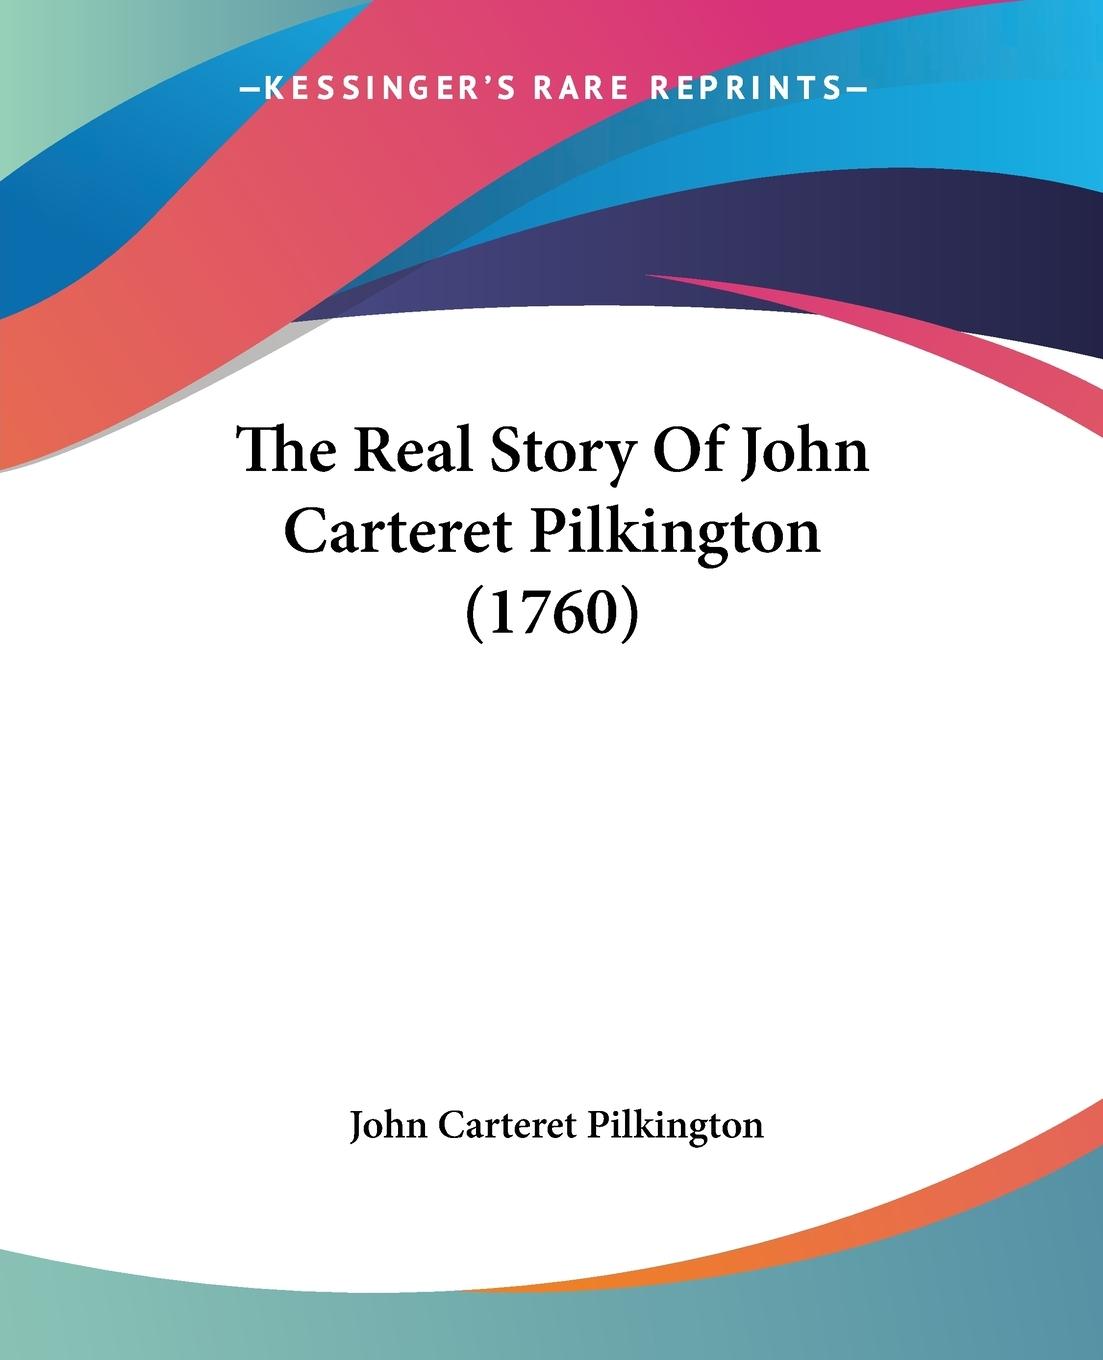 The Real Story Of John Carteret Pilkington (1760) - Pilkington, John Carteret